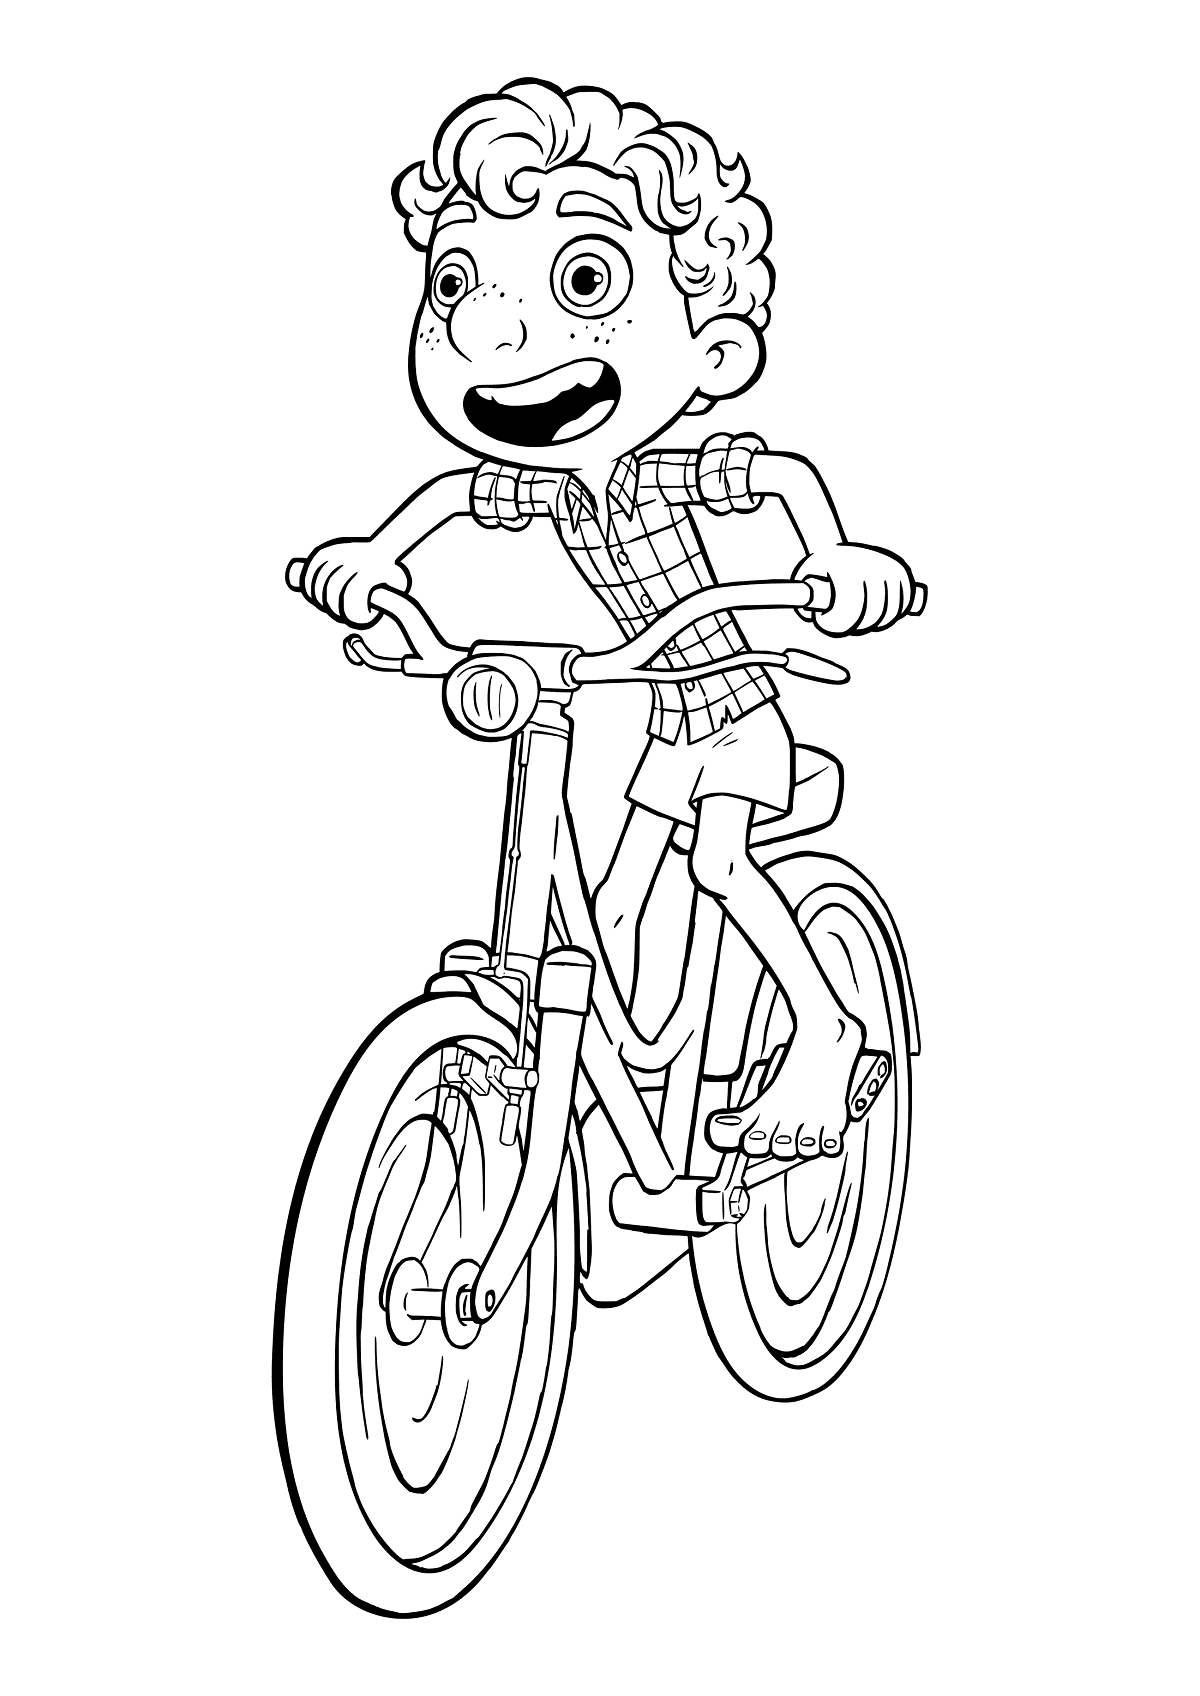 Luca fährt Fahrrad von Luca